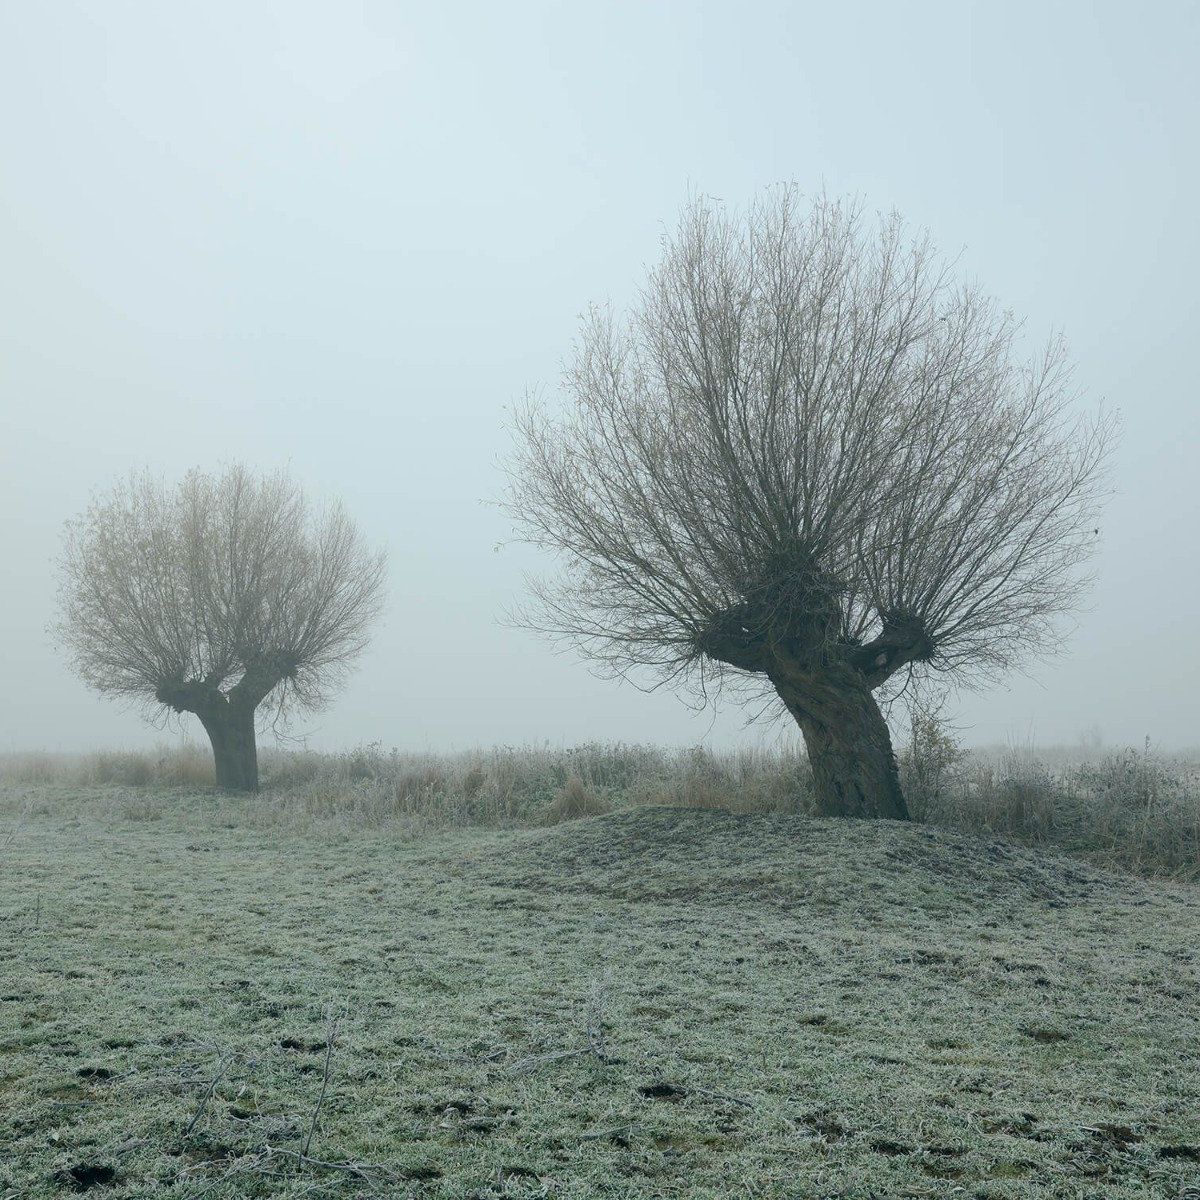 Pollard willows in the fog